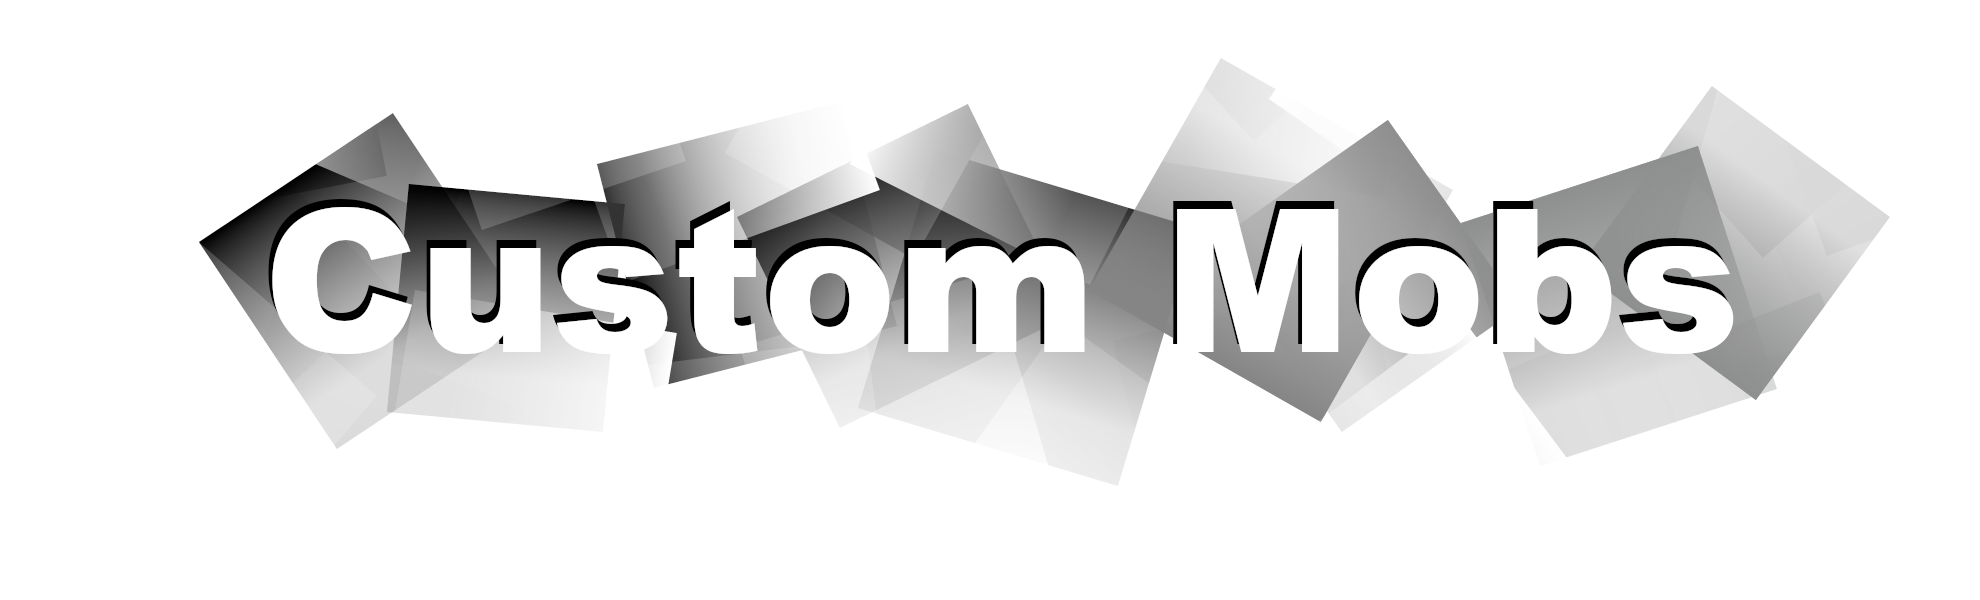 custom_mobs_logo.png